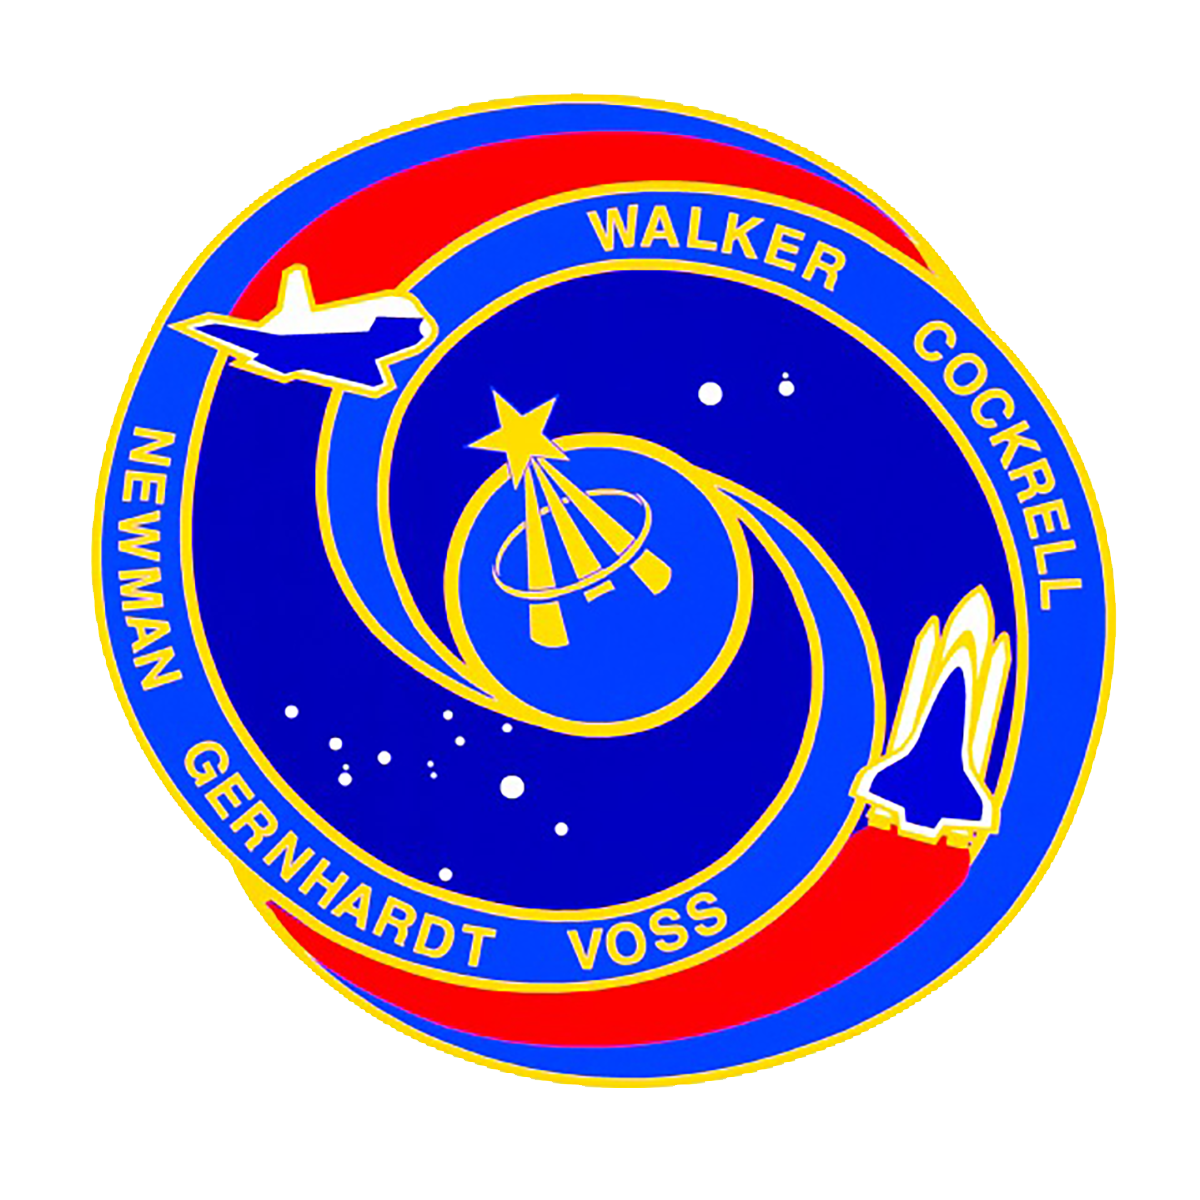 STS-69 (Endeavour)